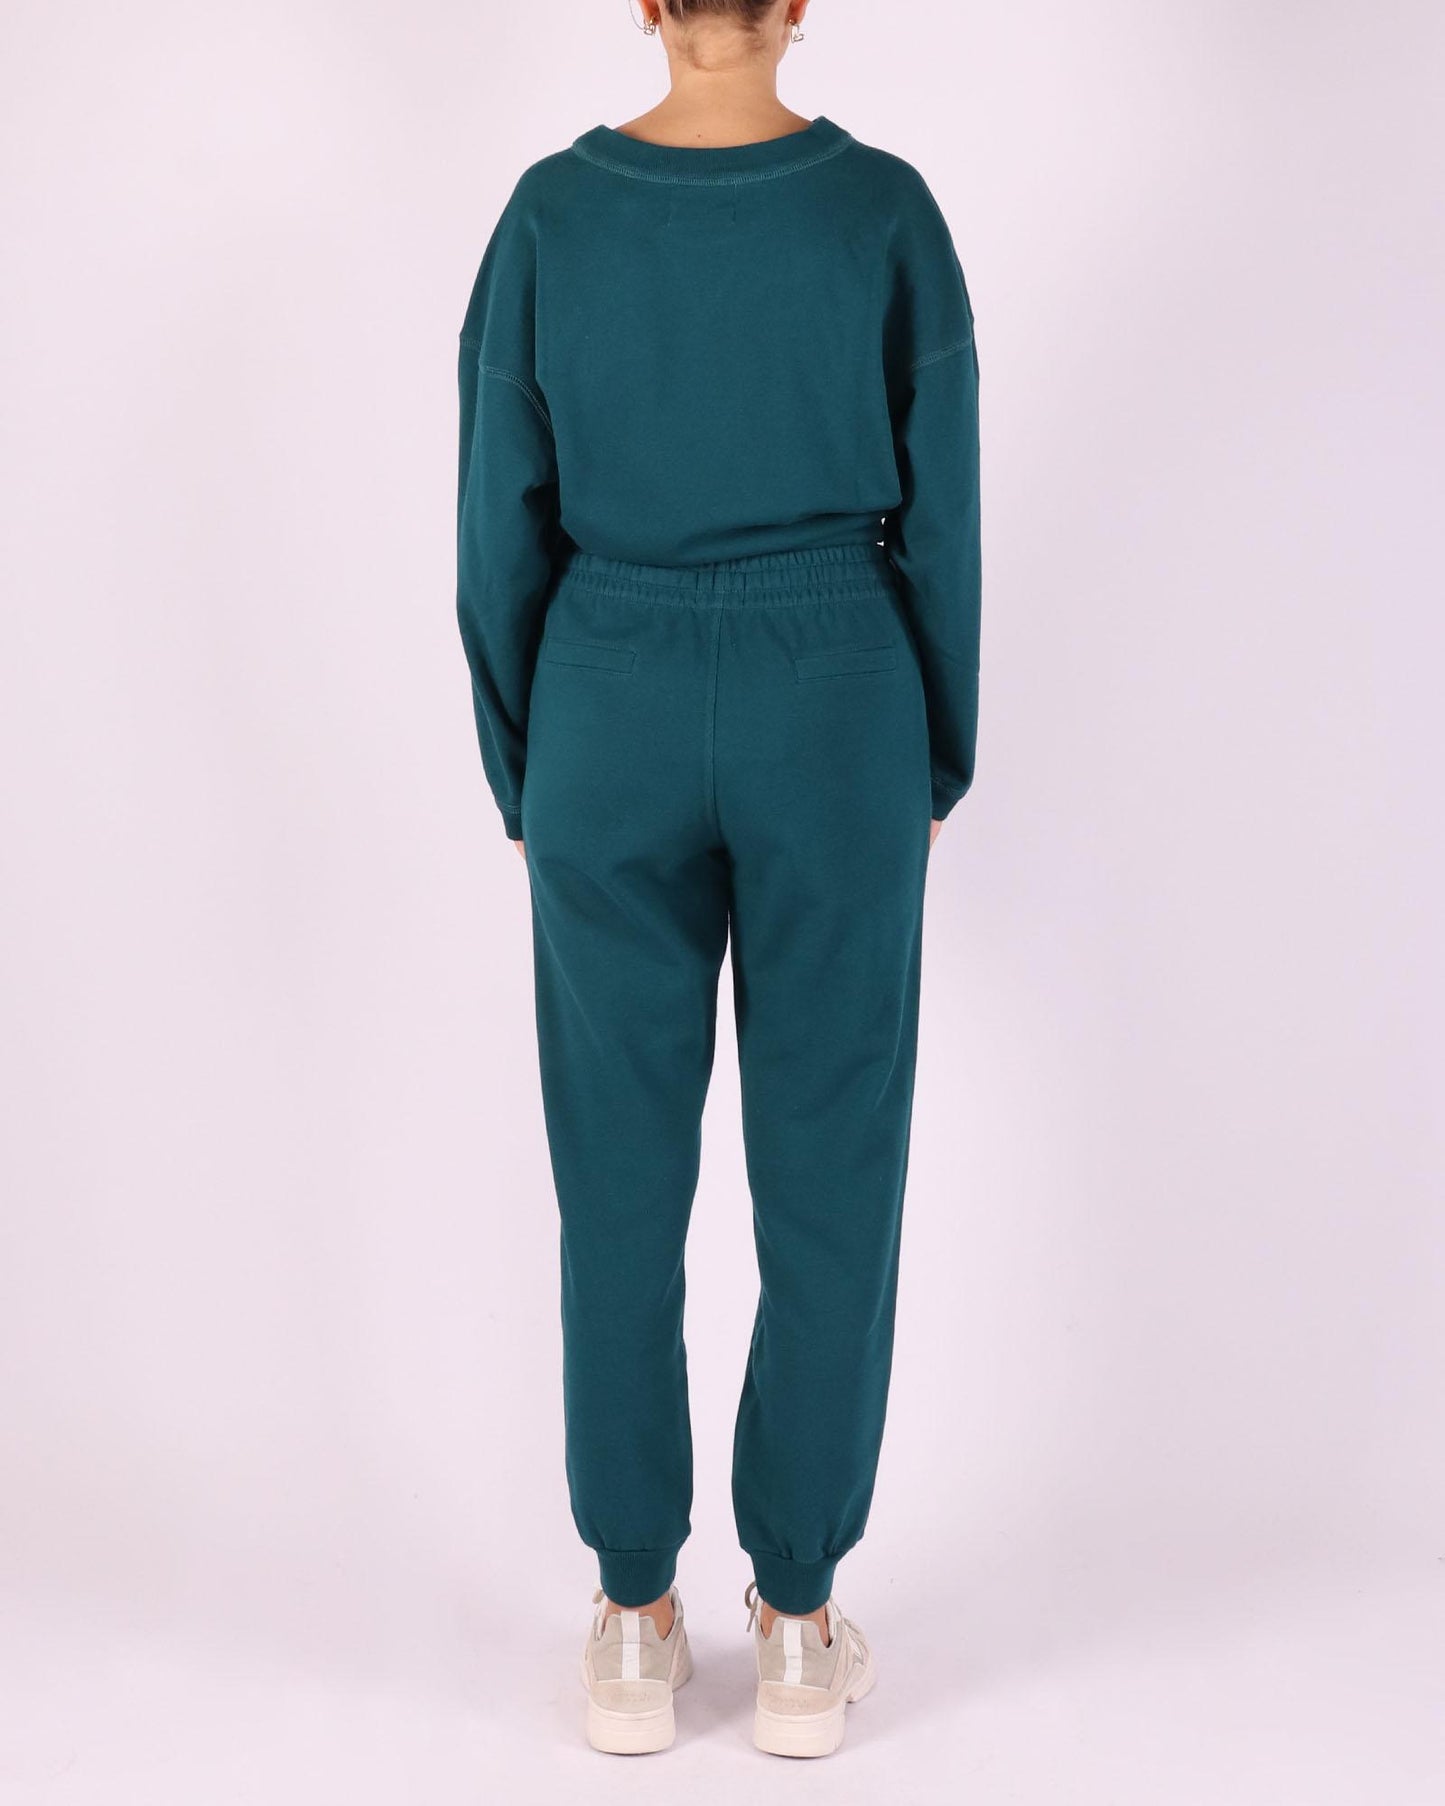 Marant Etoile Truien / Sweaters